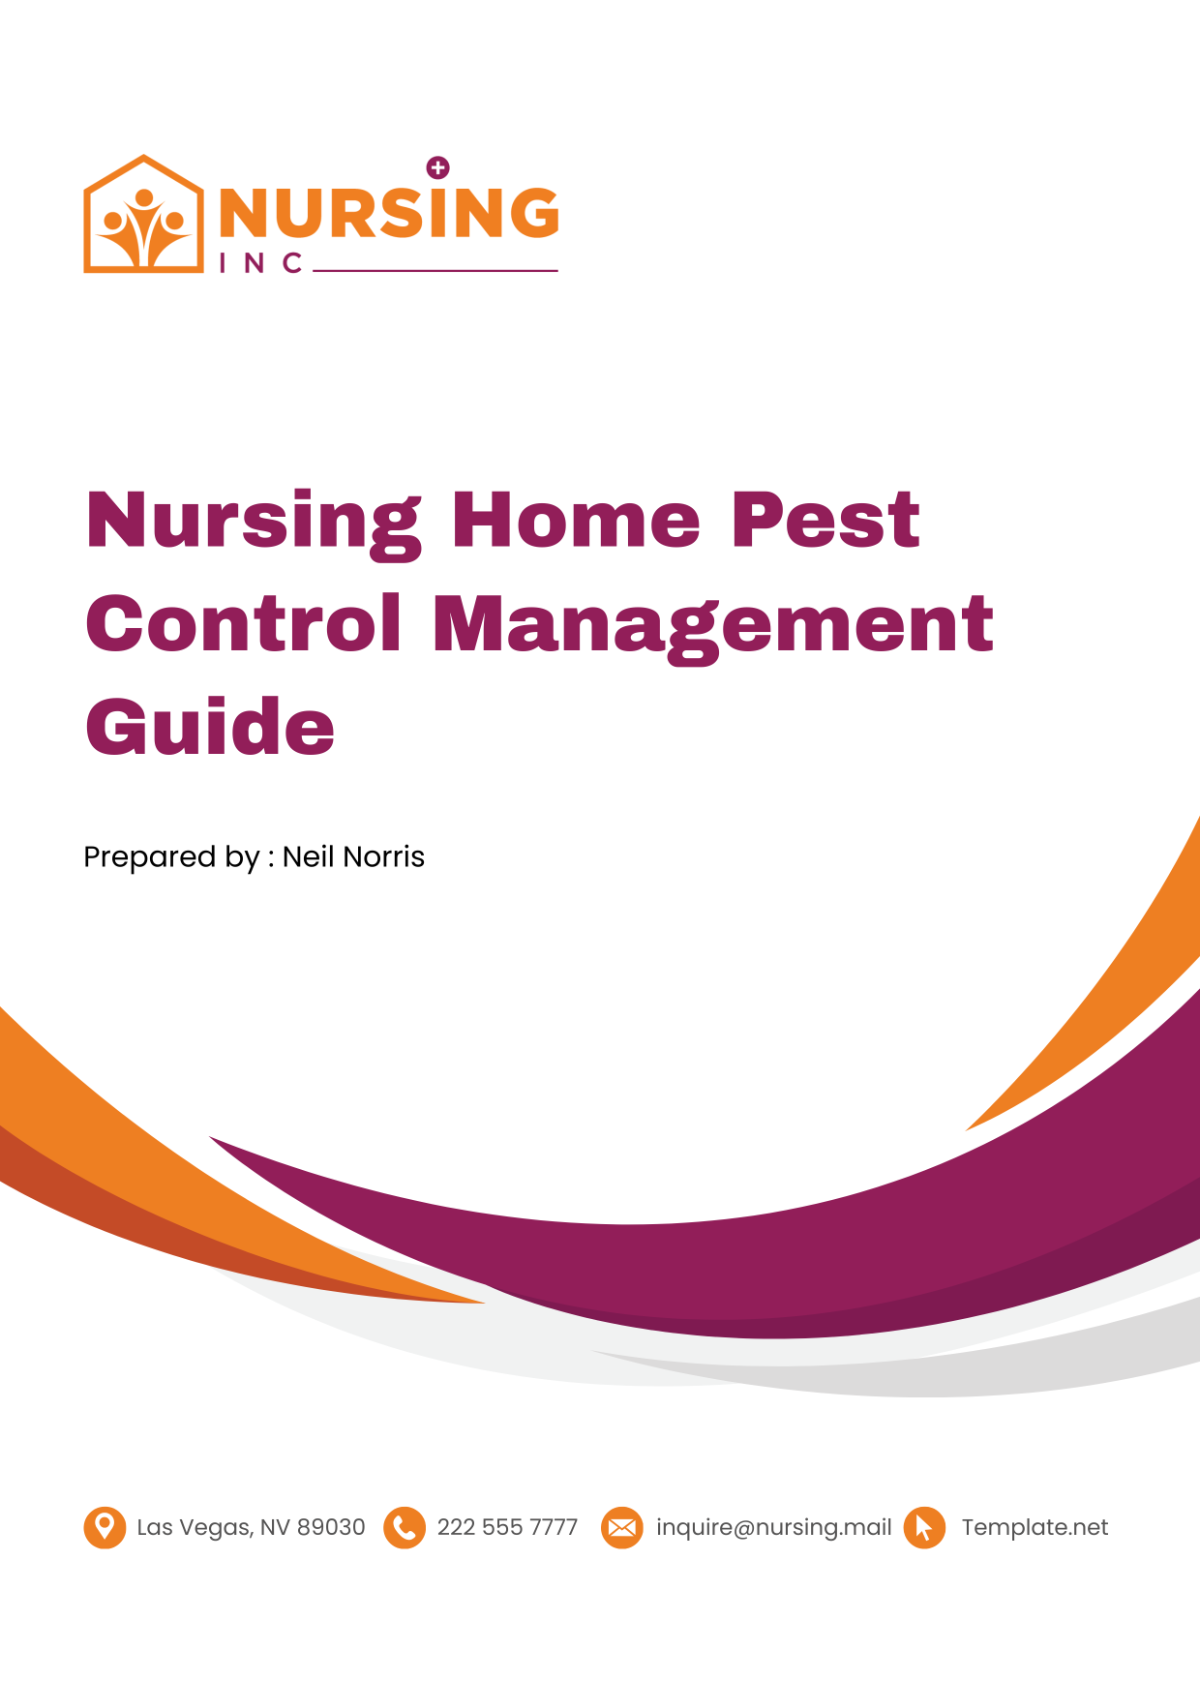 Free Nursing Home Pest Control Management Guide Template